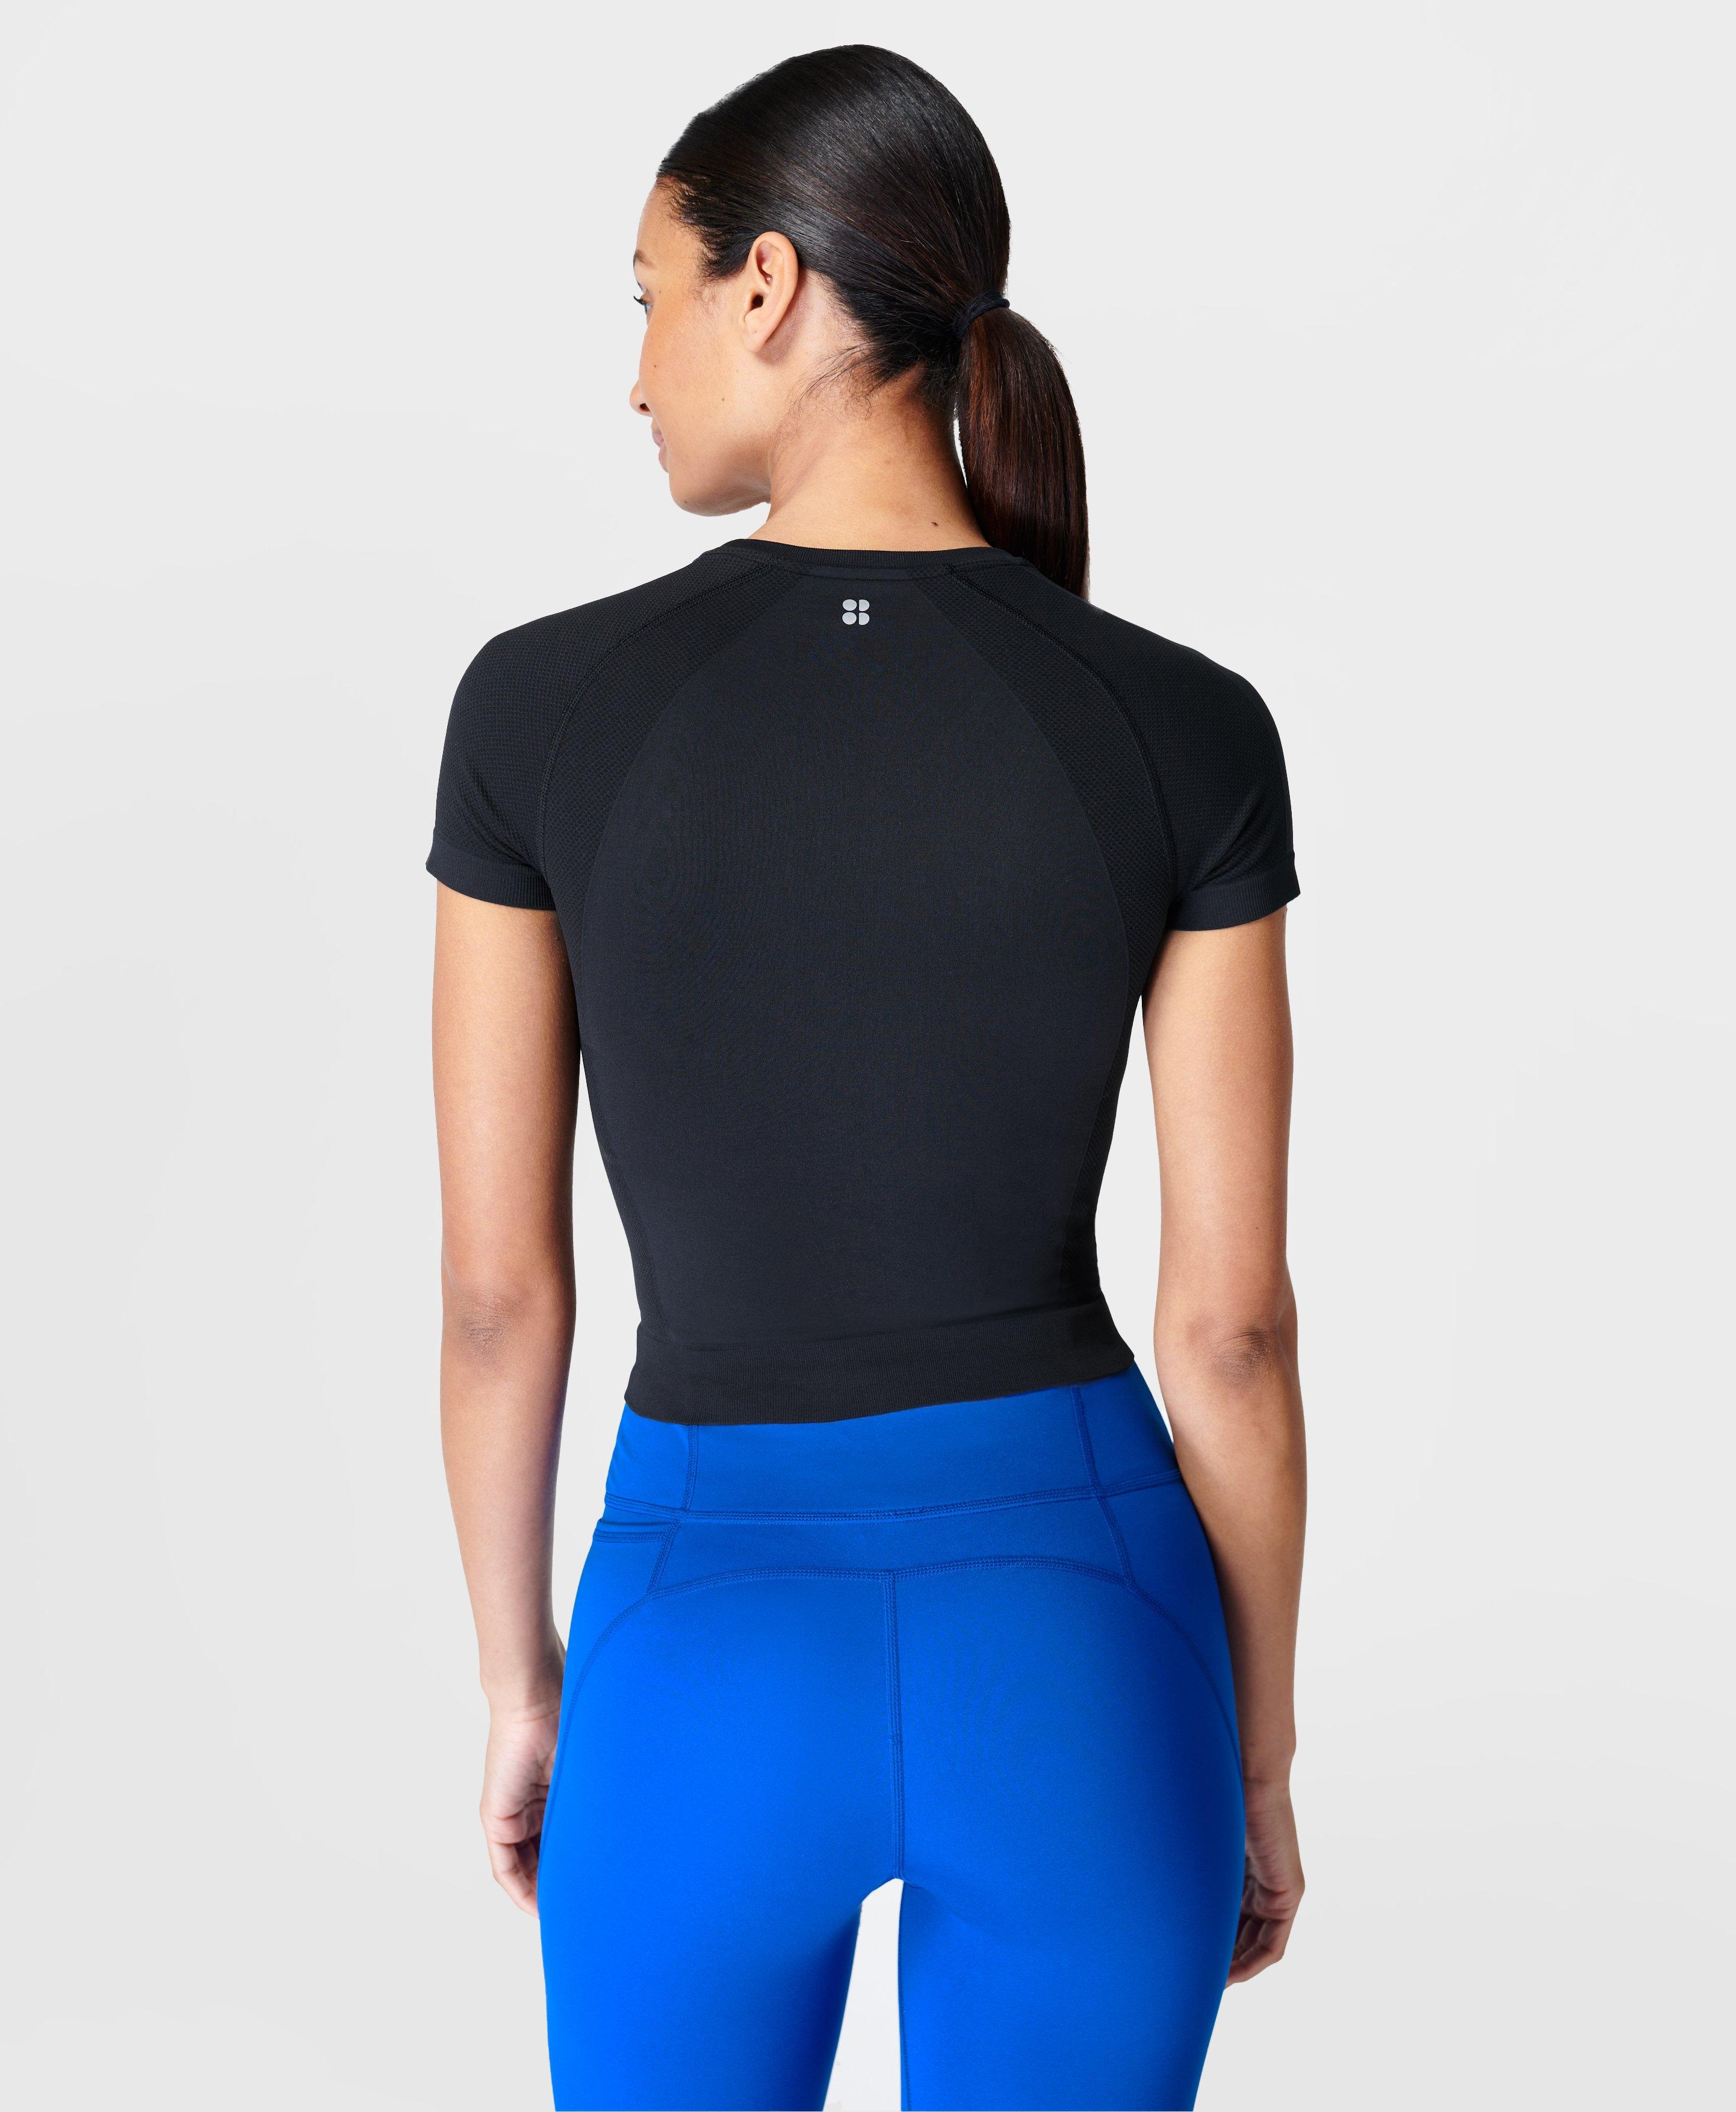 Yoga Crop Top Clothes Women's Sports Bra Fit & T-shirt Short Sleeves Women  Spring Summer